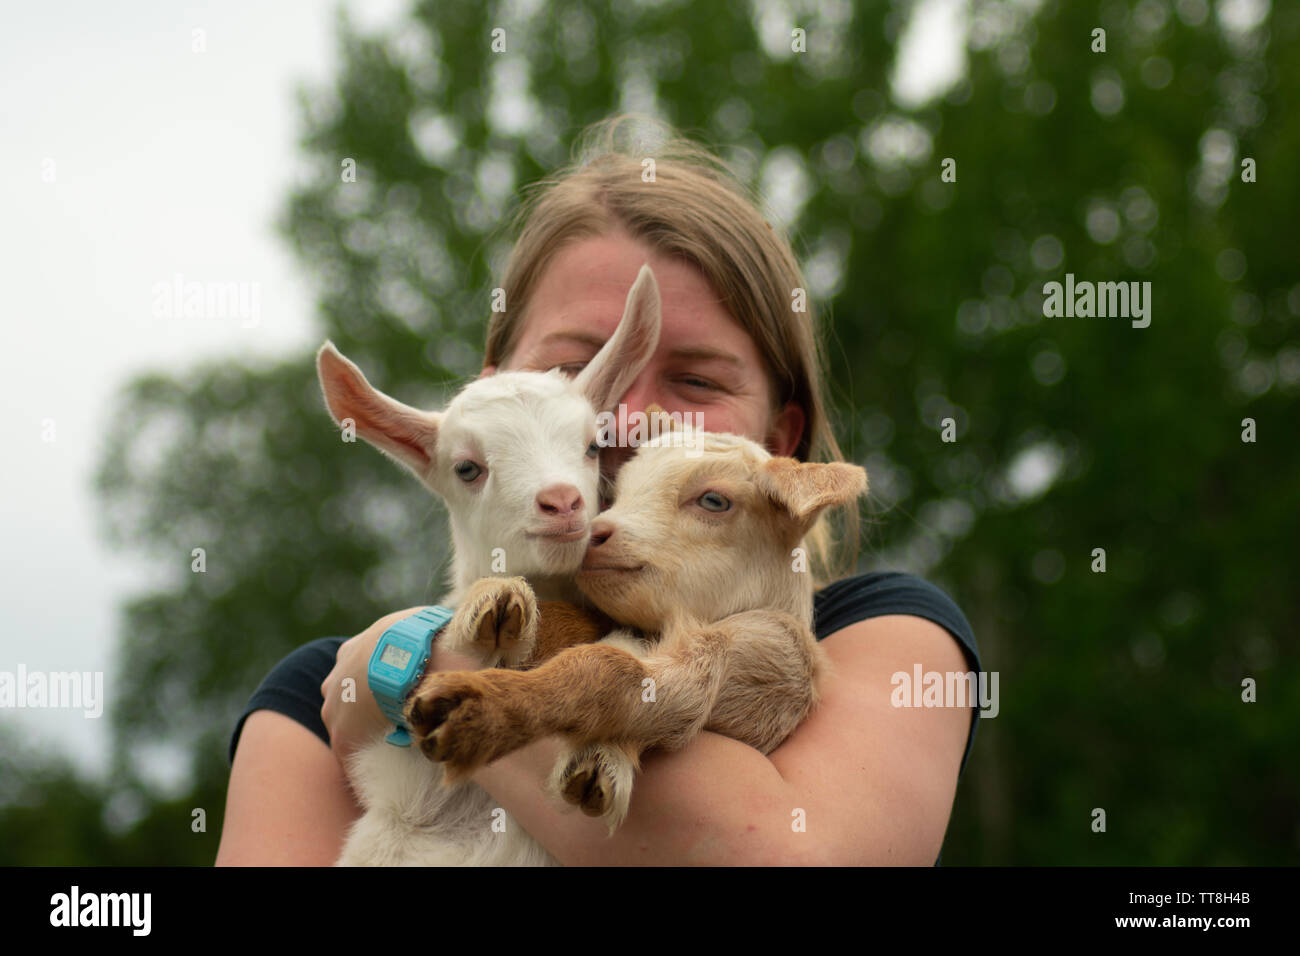 Golden Guernsey Goat Stock Photo